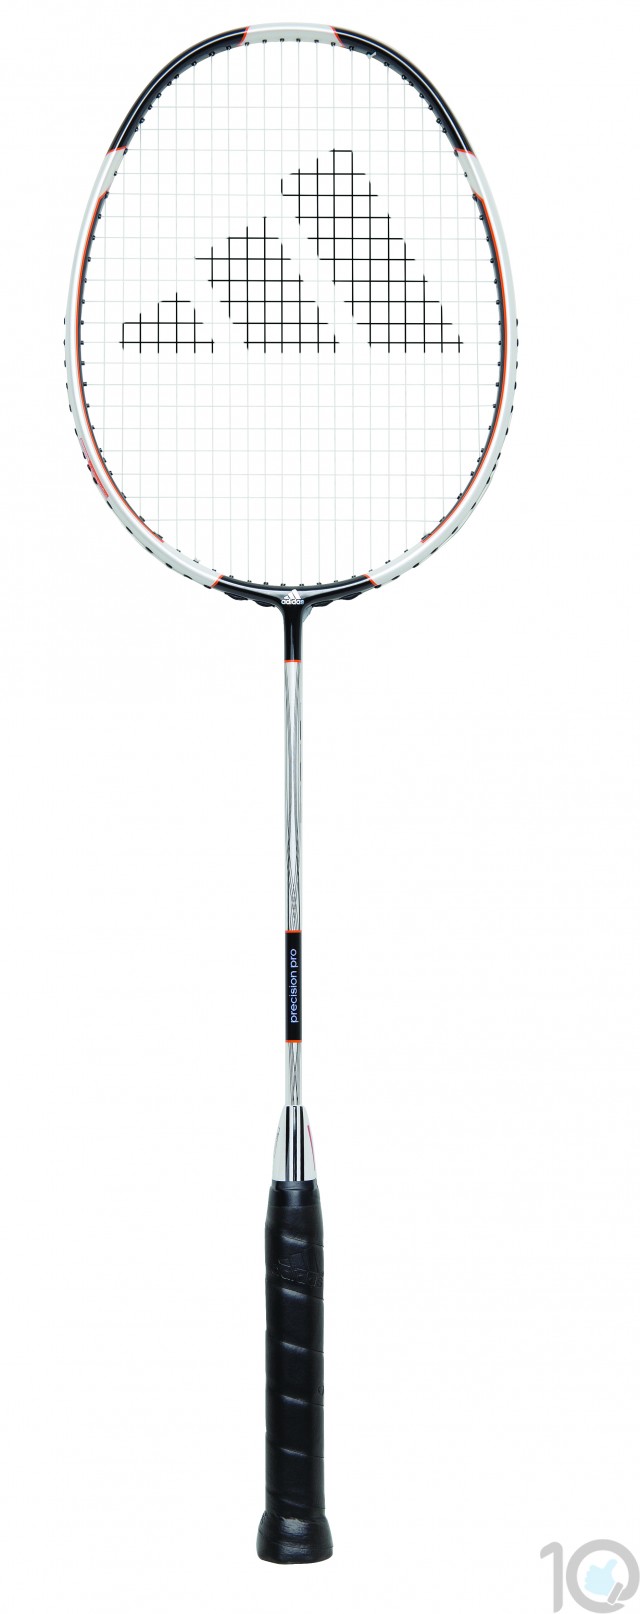 Buy Online India Adidas Precision Pro Badminton Racket ...